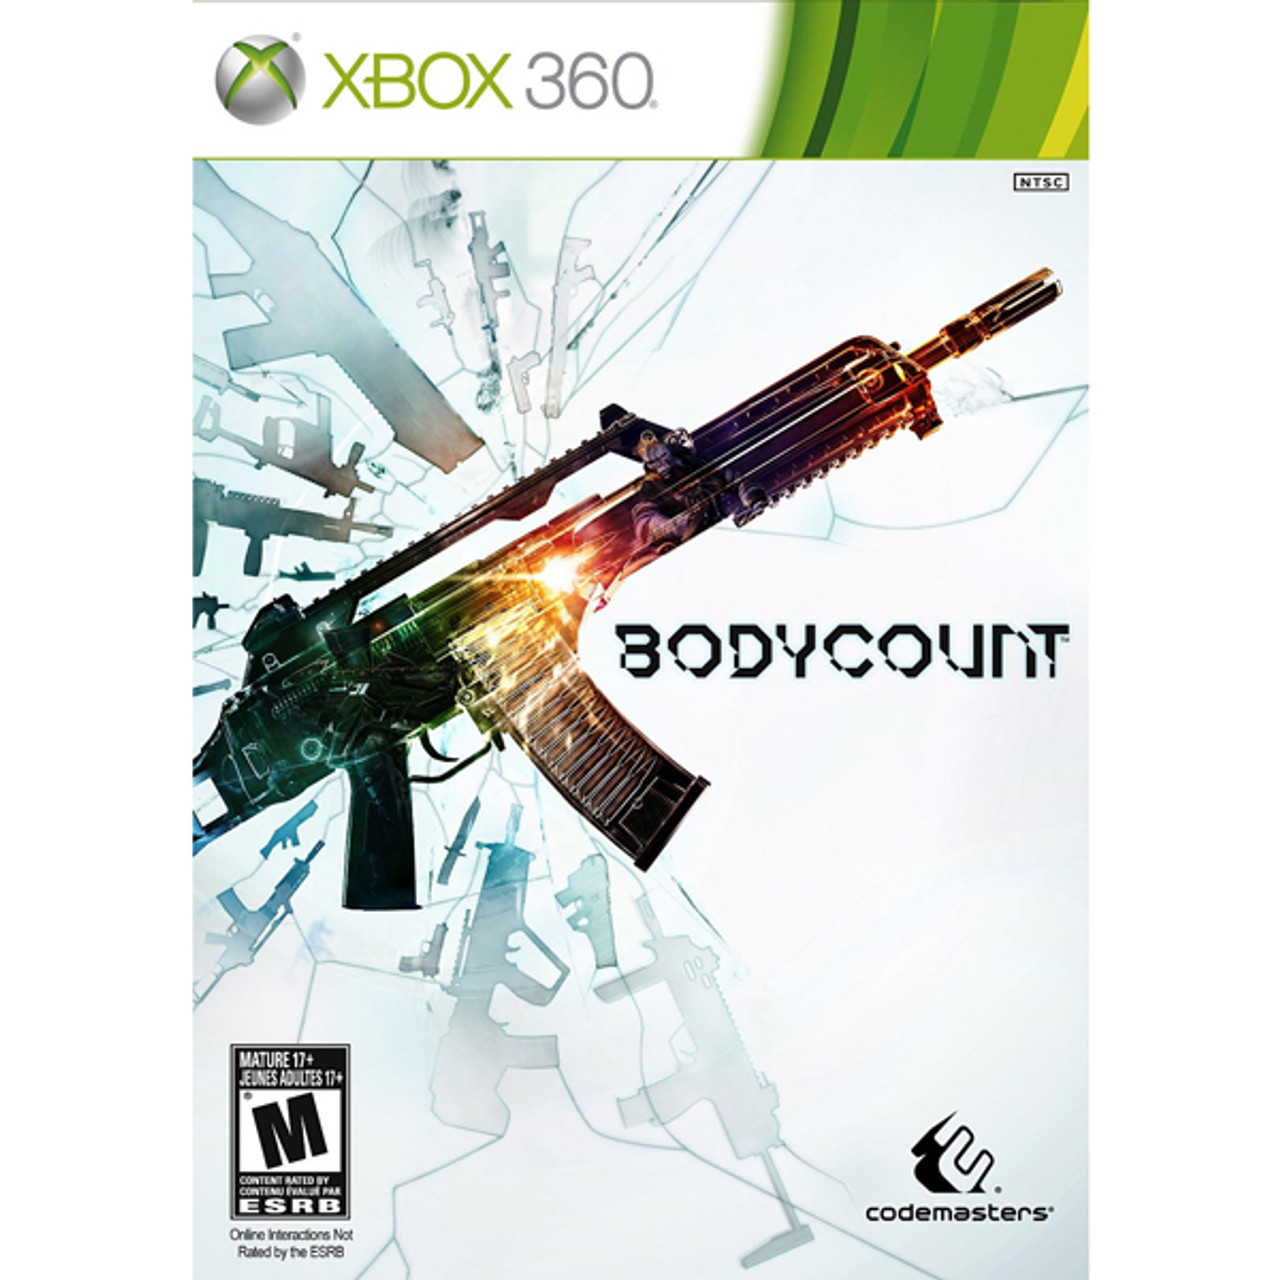 Preços baixos em Microsoft Xbox 360 Gun Shooter Video Games